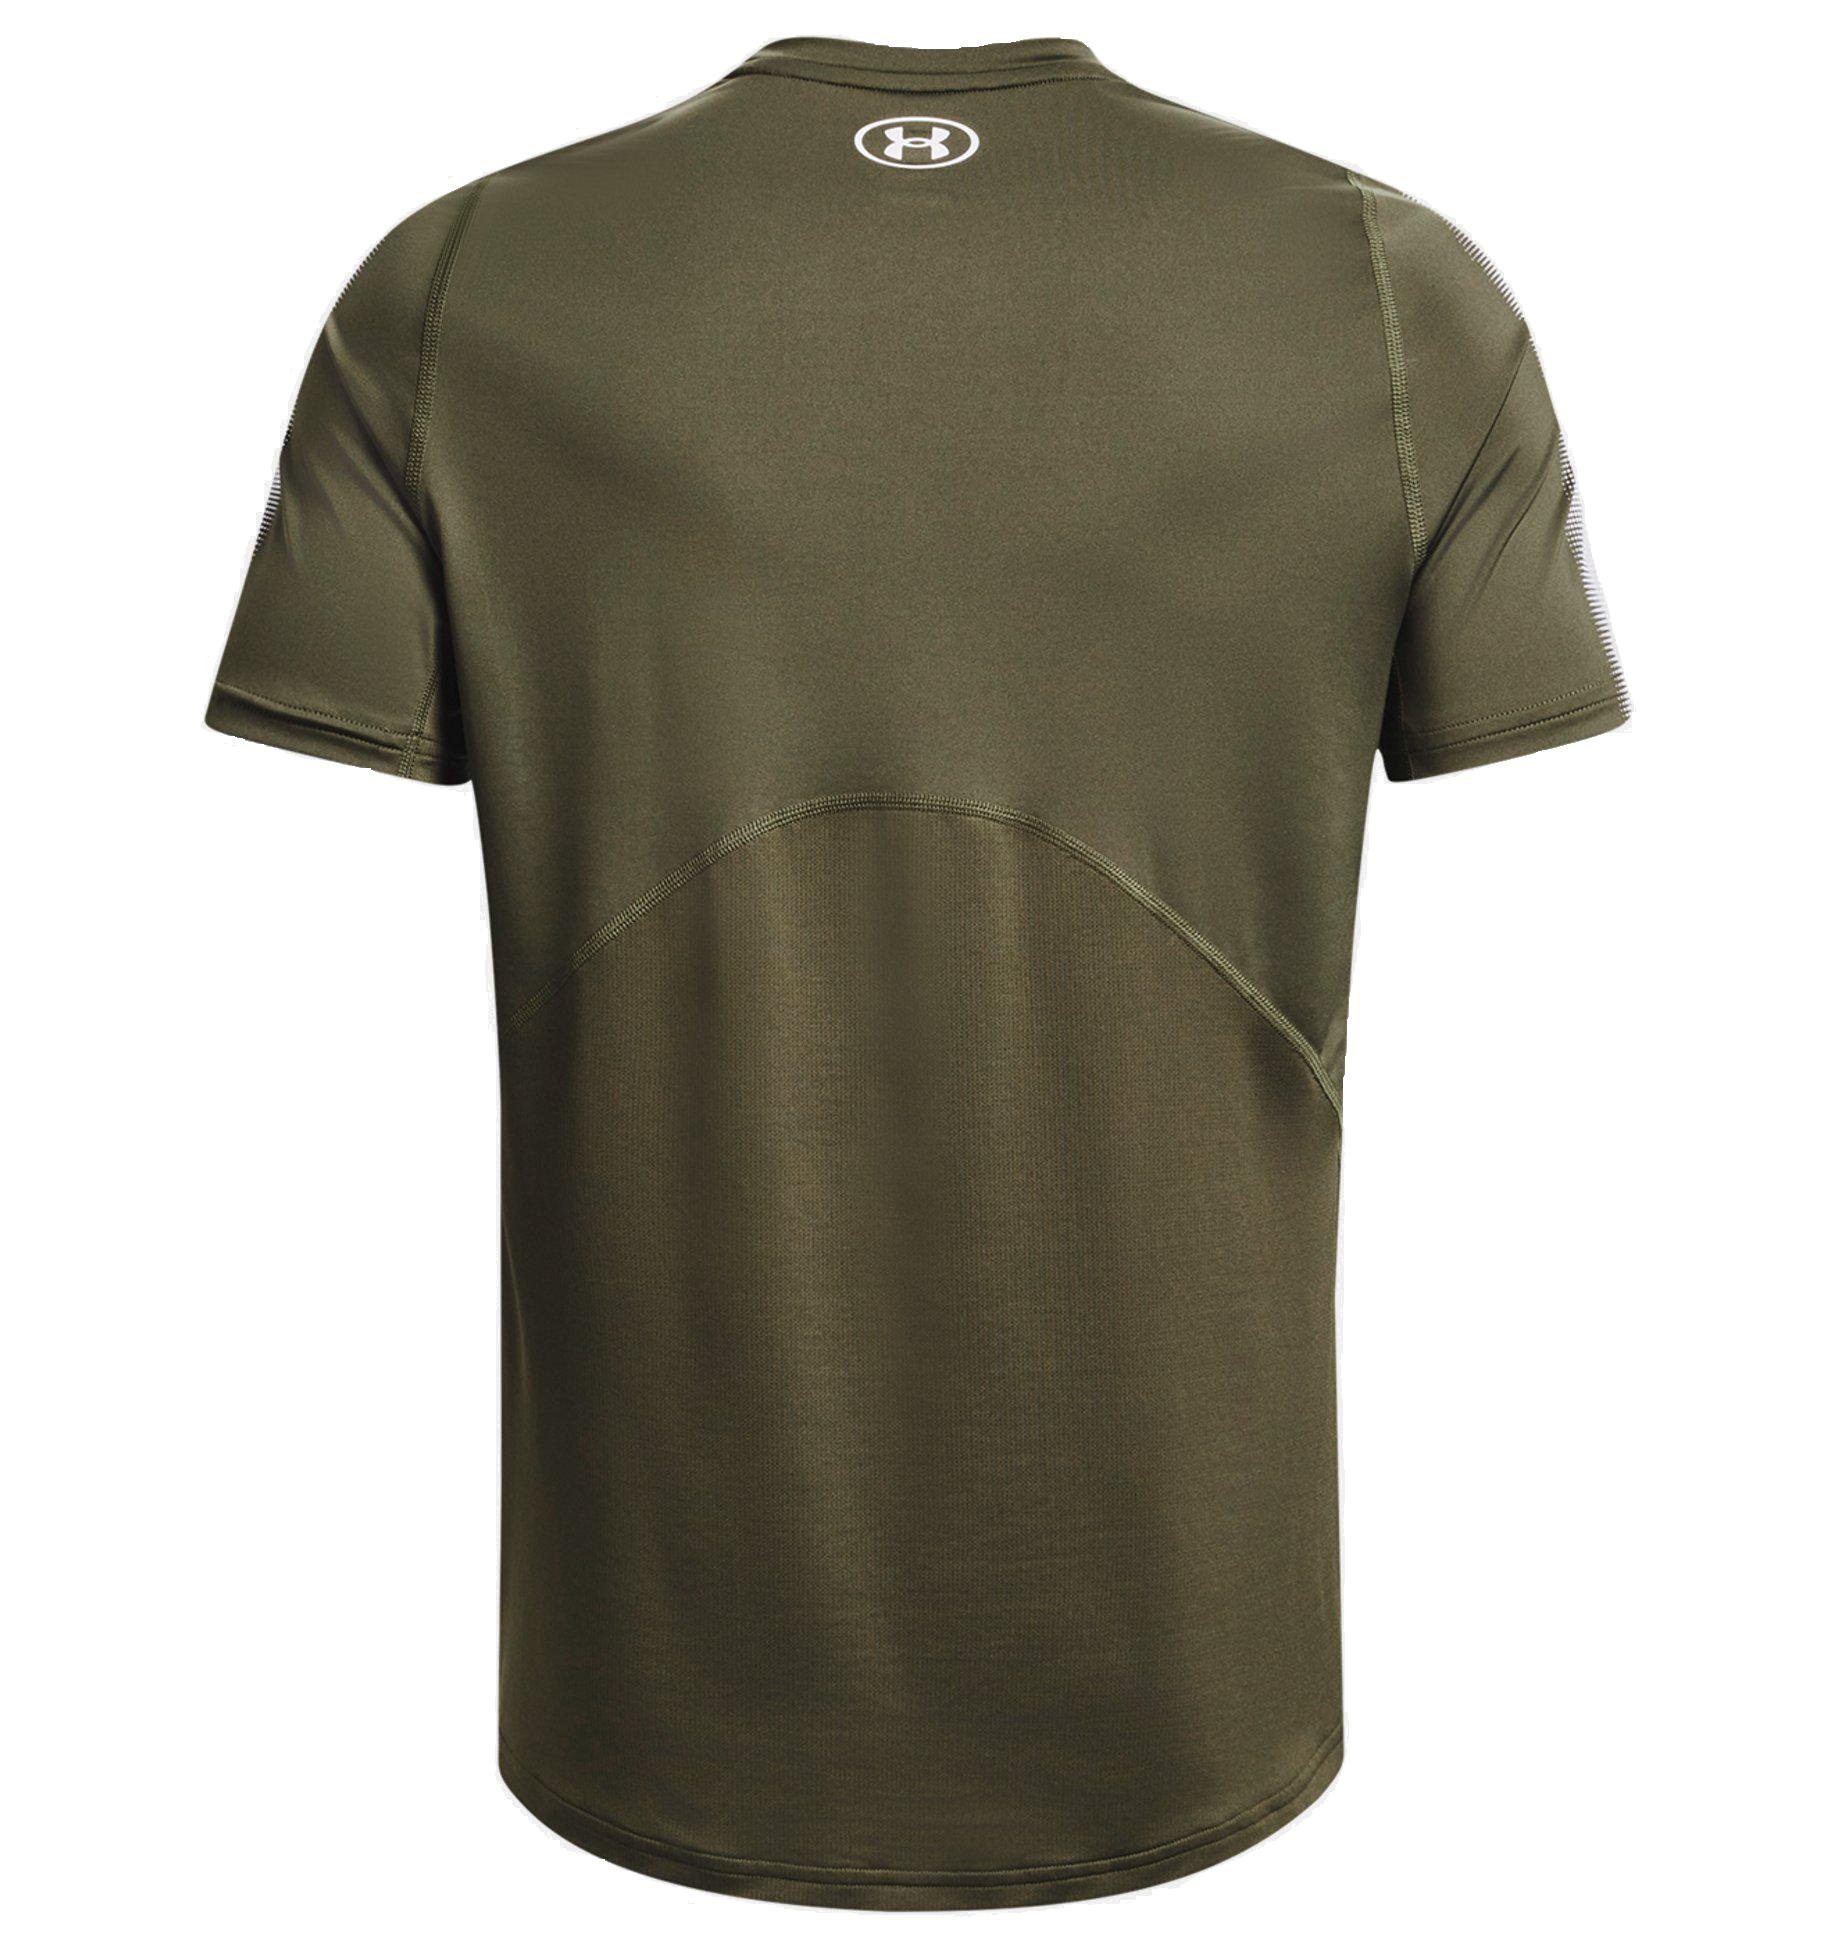 Under UA Herren T-Shirt Armour® T-Shirt HeatGear Khaki